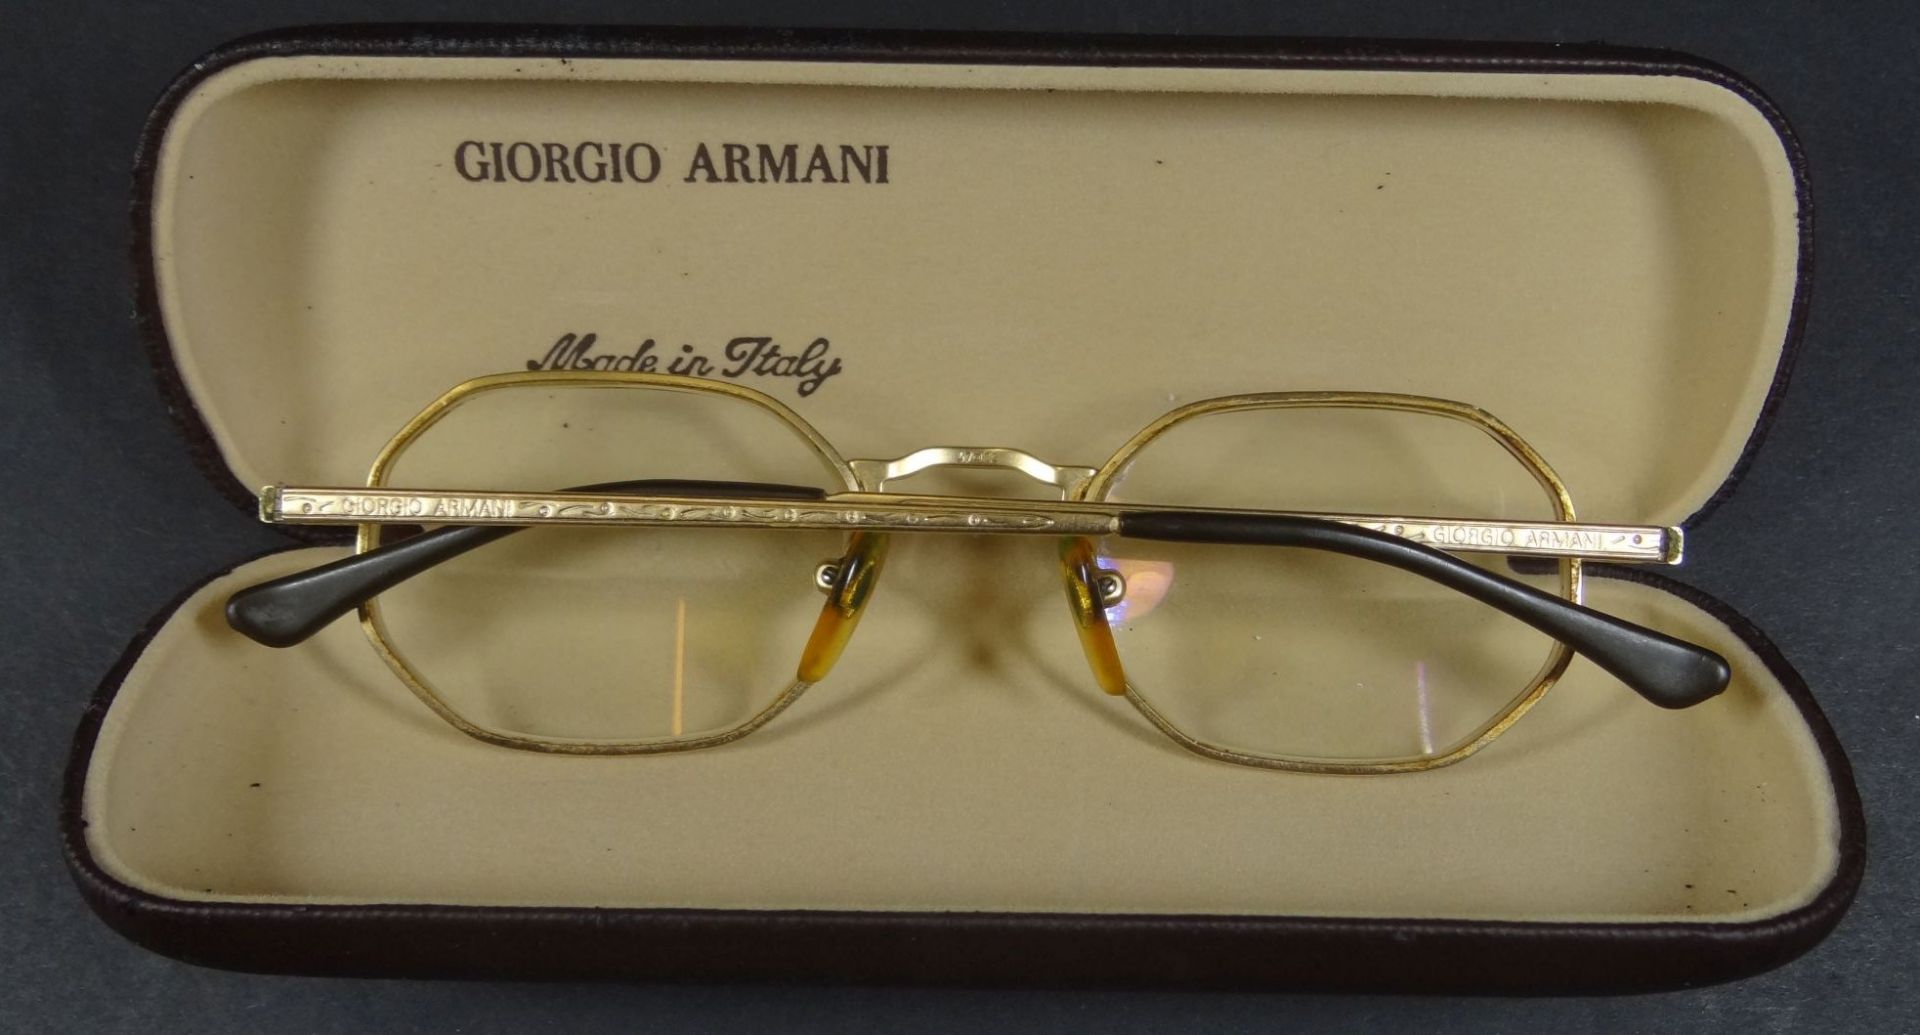 Brille in Etui "Giorgio Armani", Alters-u. Gebrauchsspuren - Bild 3 aus 7